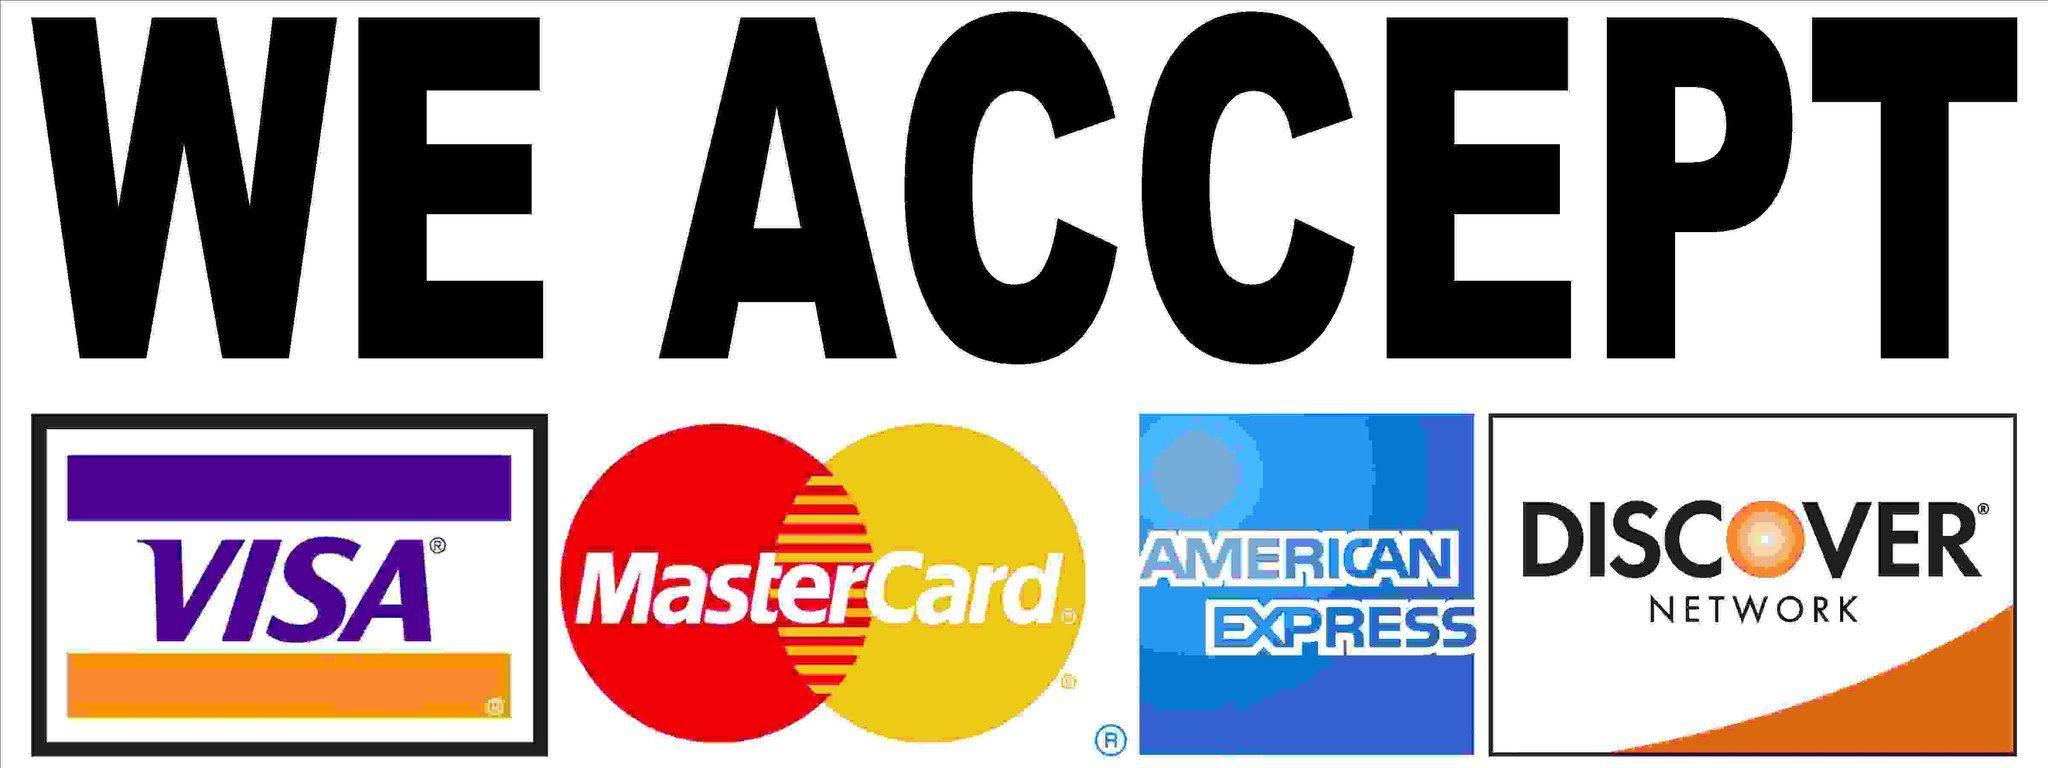 American Express Visa MasterCard Logo - LogoDix